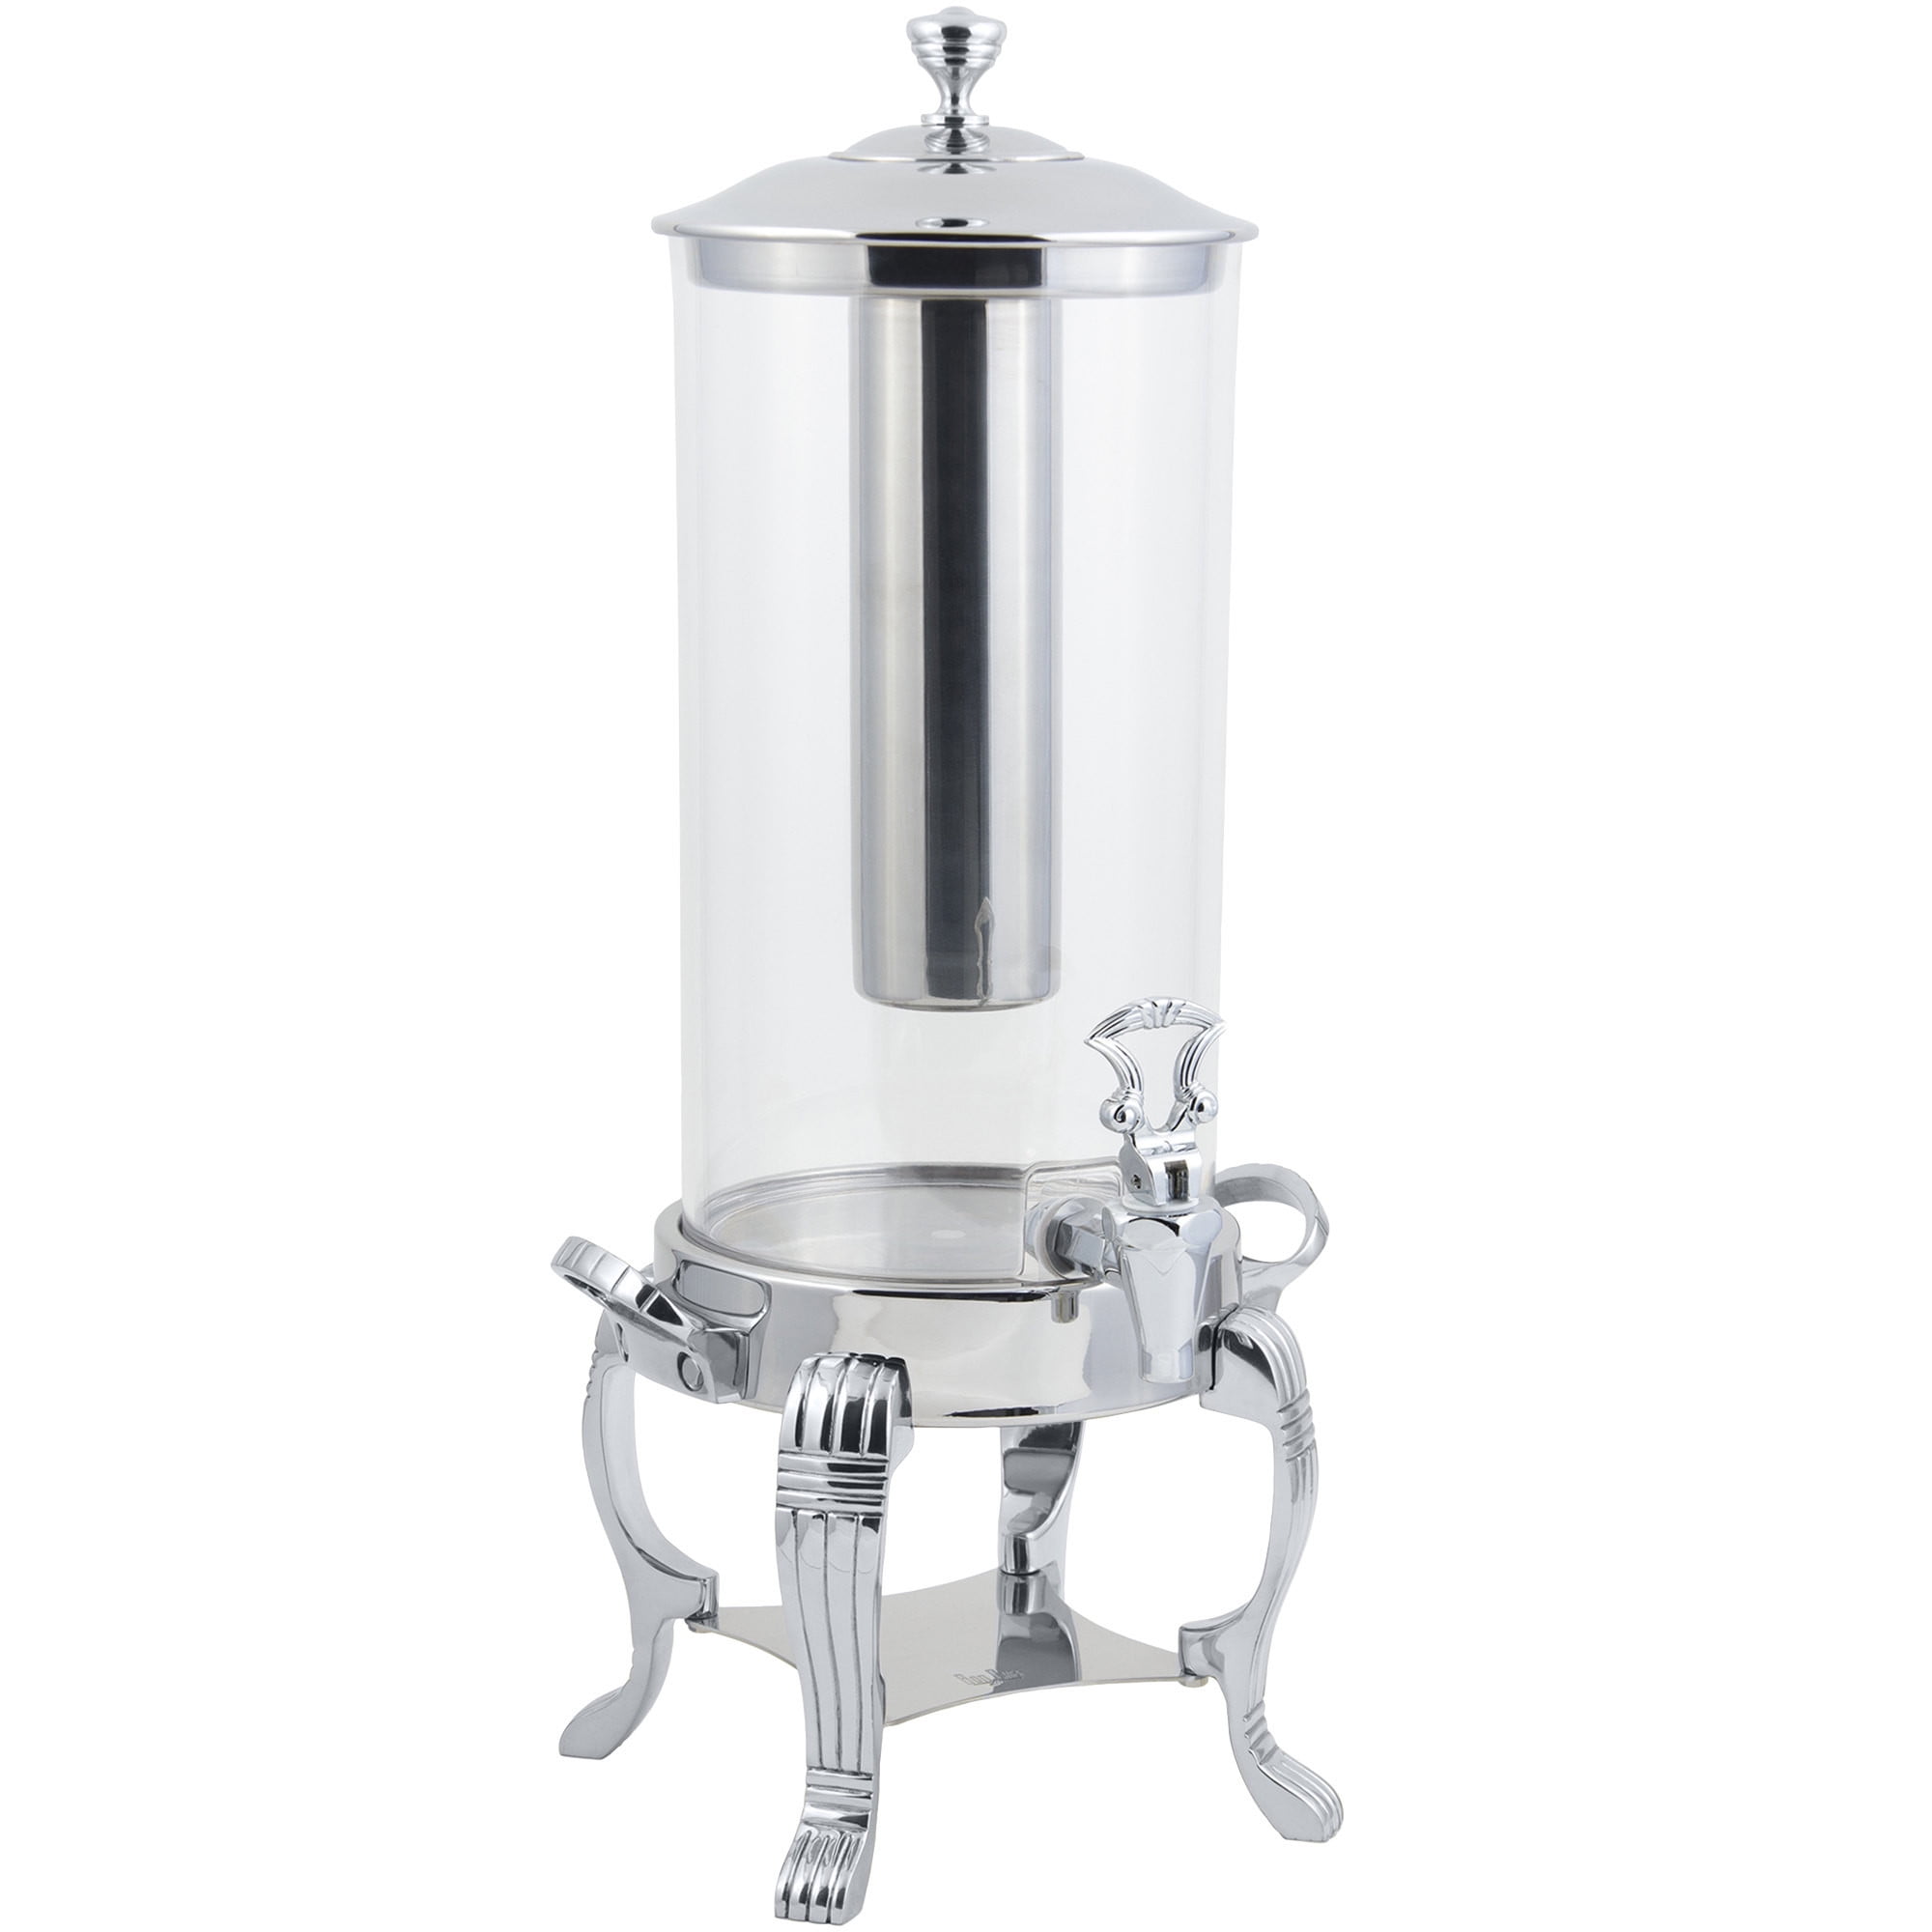 Cheftor Heavy Duty Insulated Stainless Steel Water Beverage Cooler Dispenser 